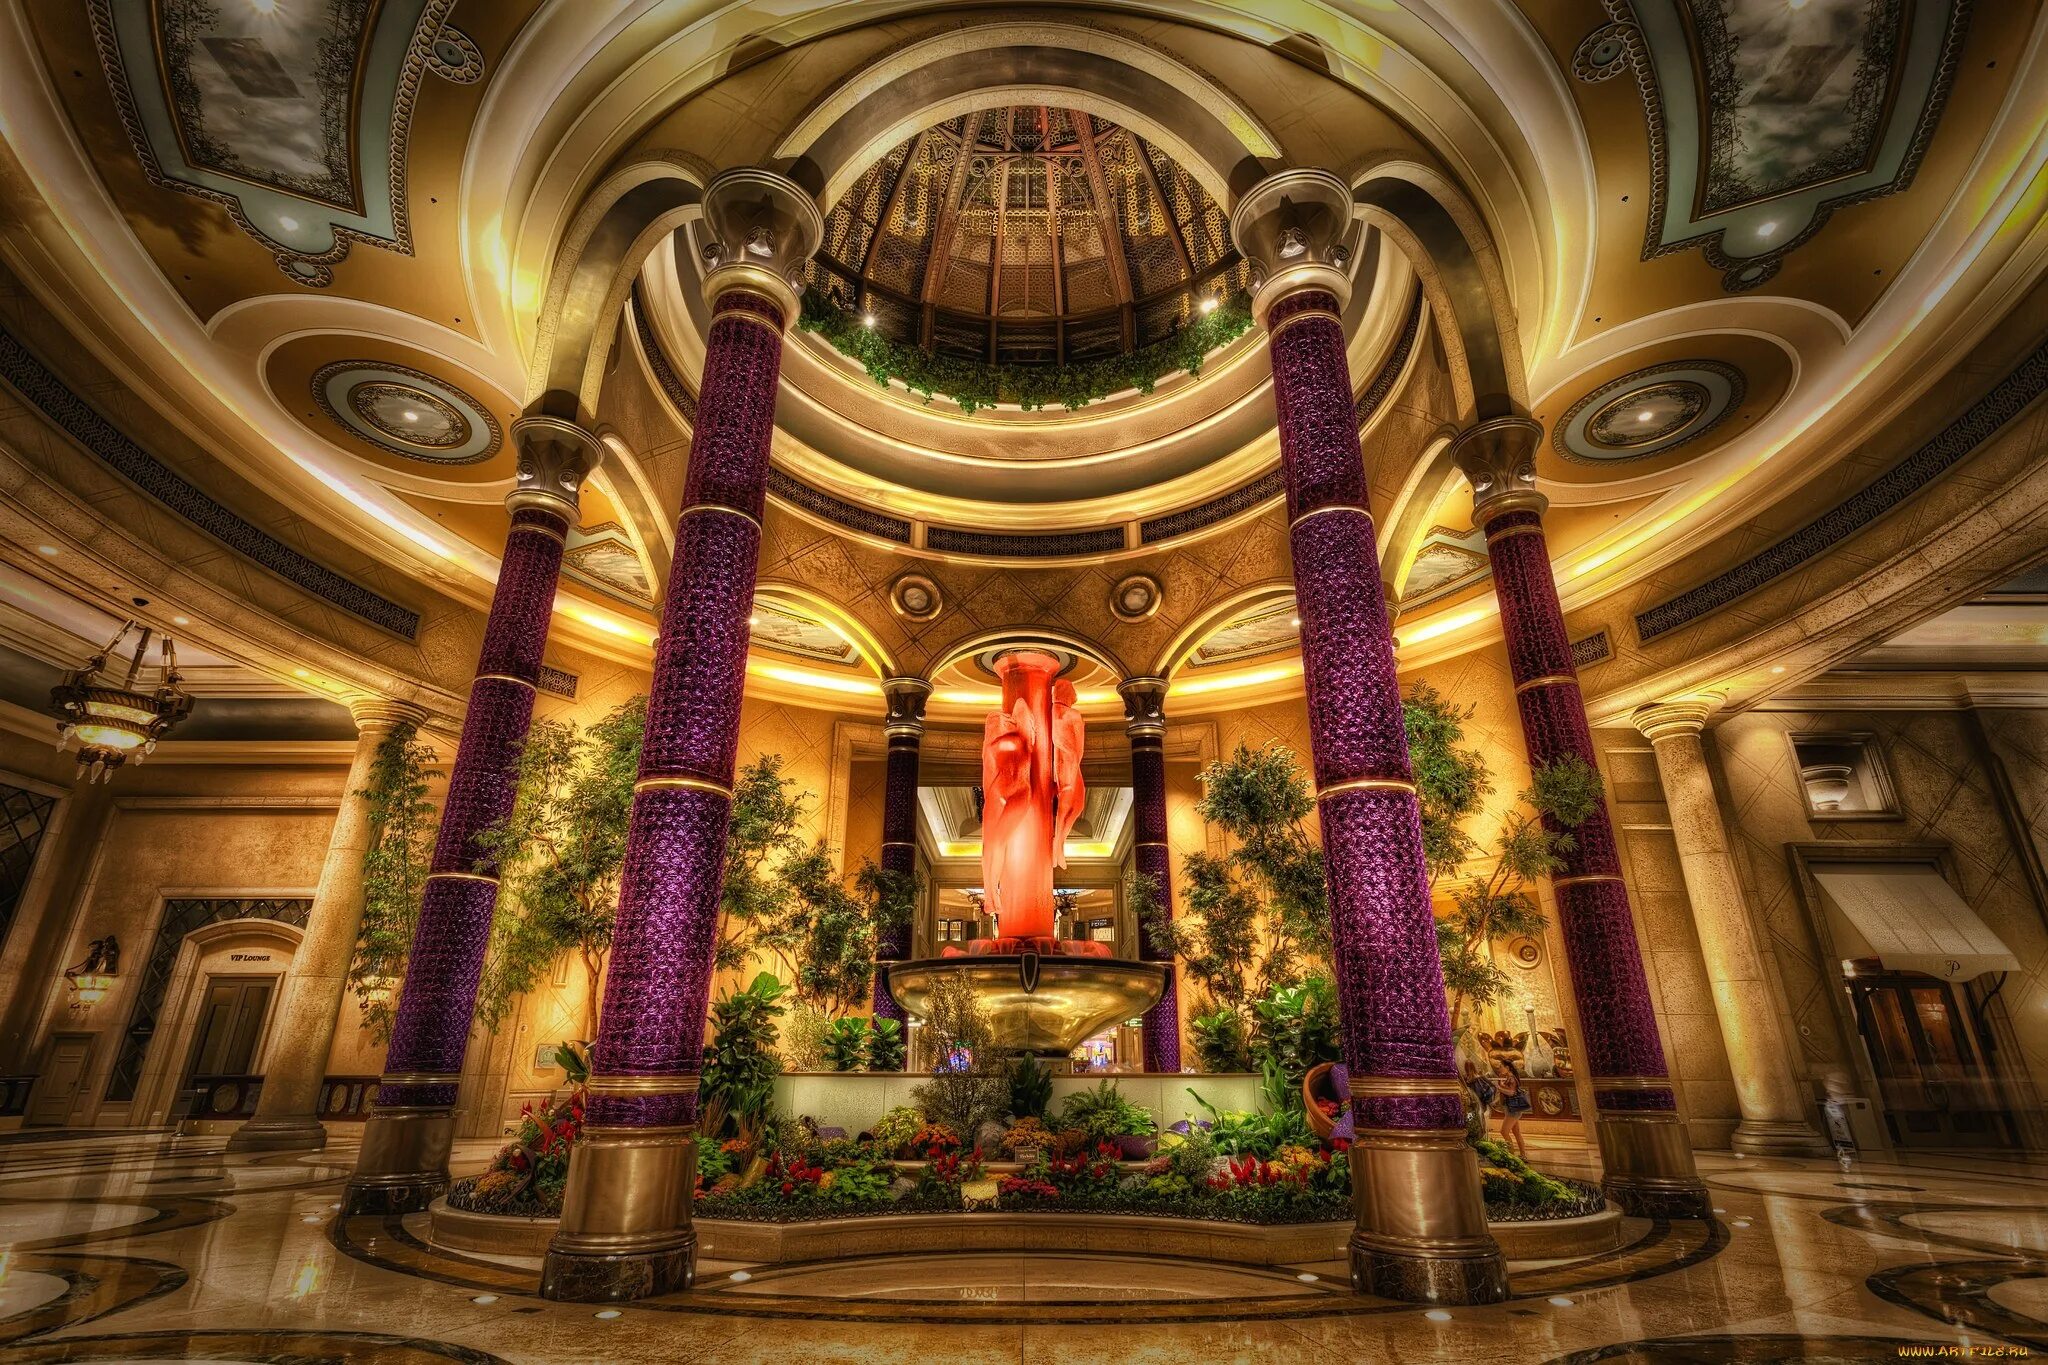 Тронный зал дворца Египта. Зал с колоннами во Дворце. Дворец с колоннами. Дворец внутри. Галерея с колоннами 6 букв